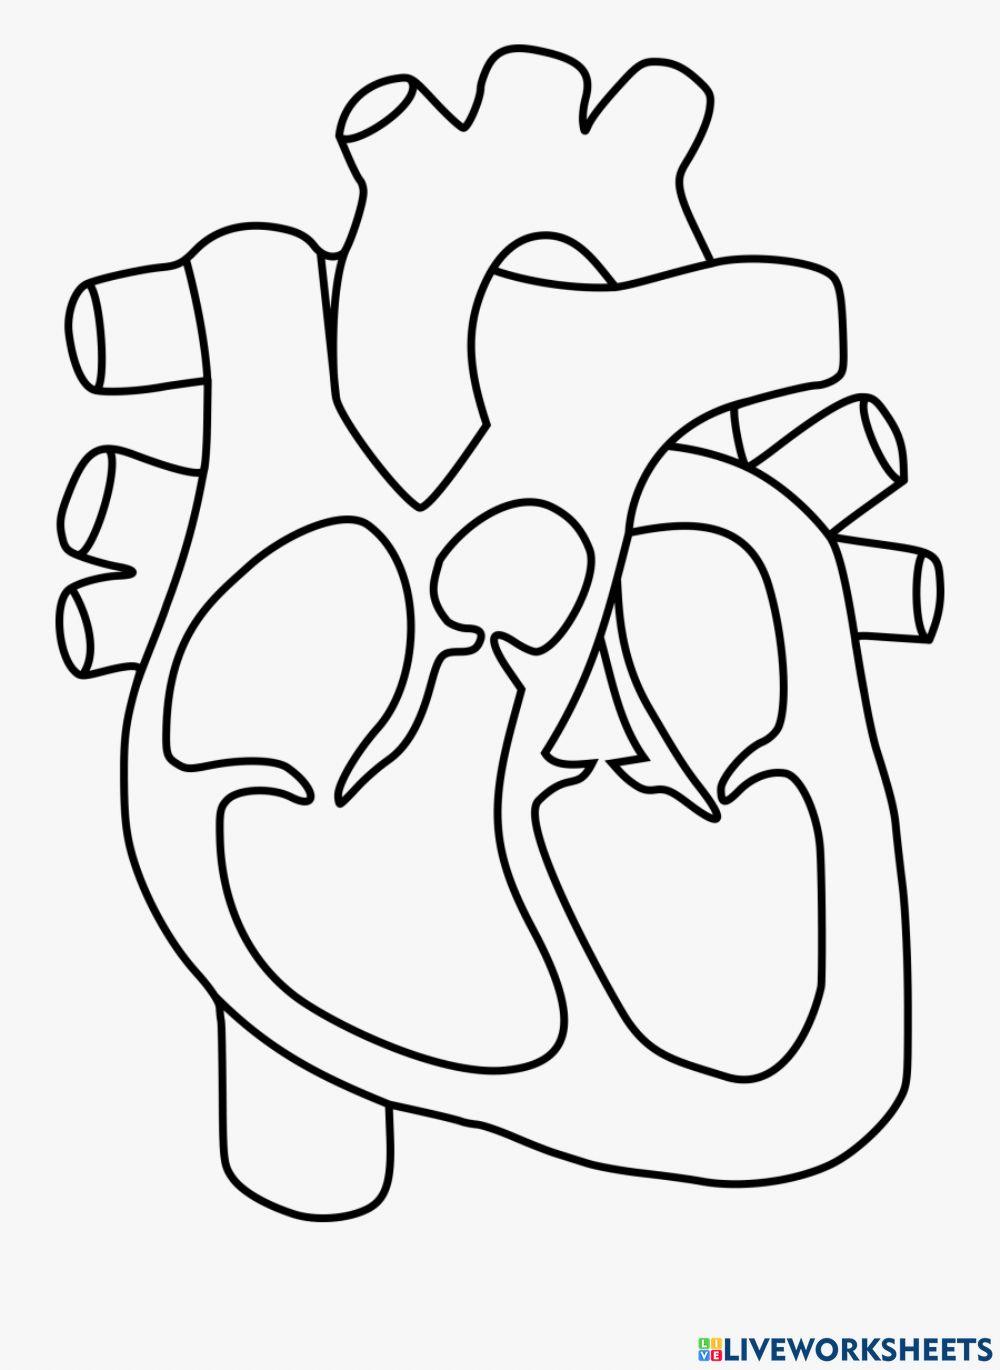 Label struktur jantung